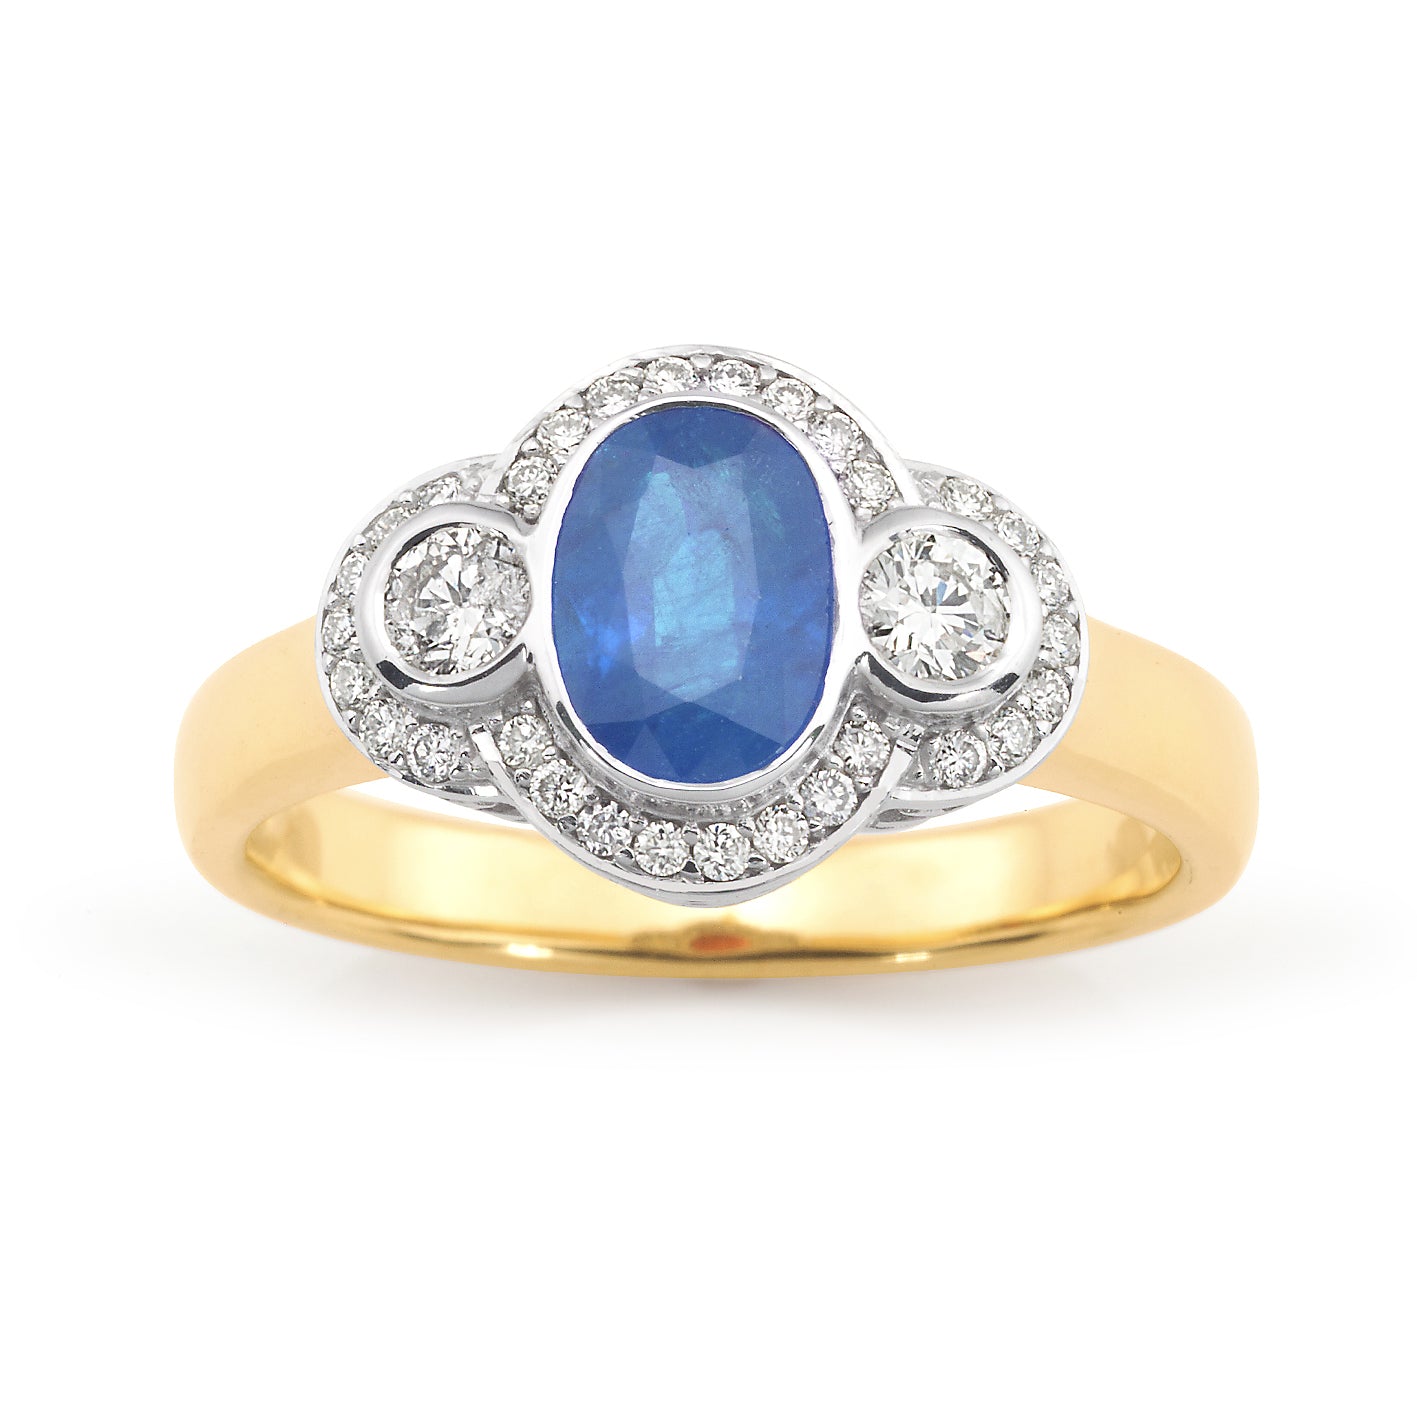 Harriette' Ceylon Sapphire & Diamond Ring in 9ct Yellow & White Gold